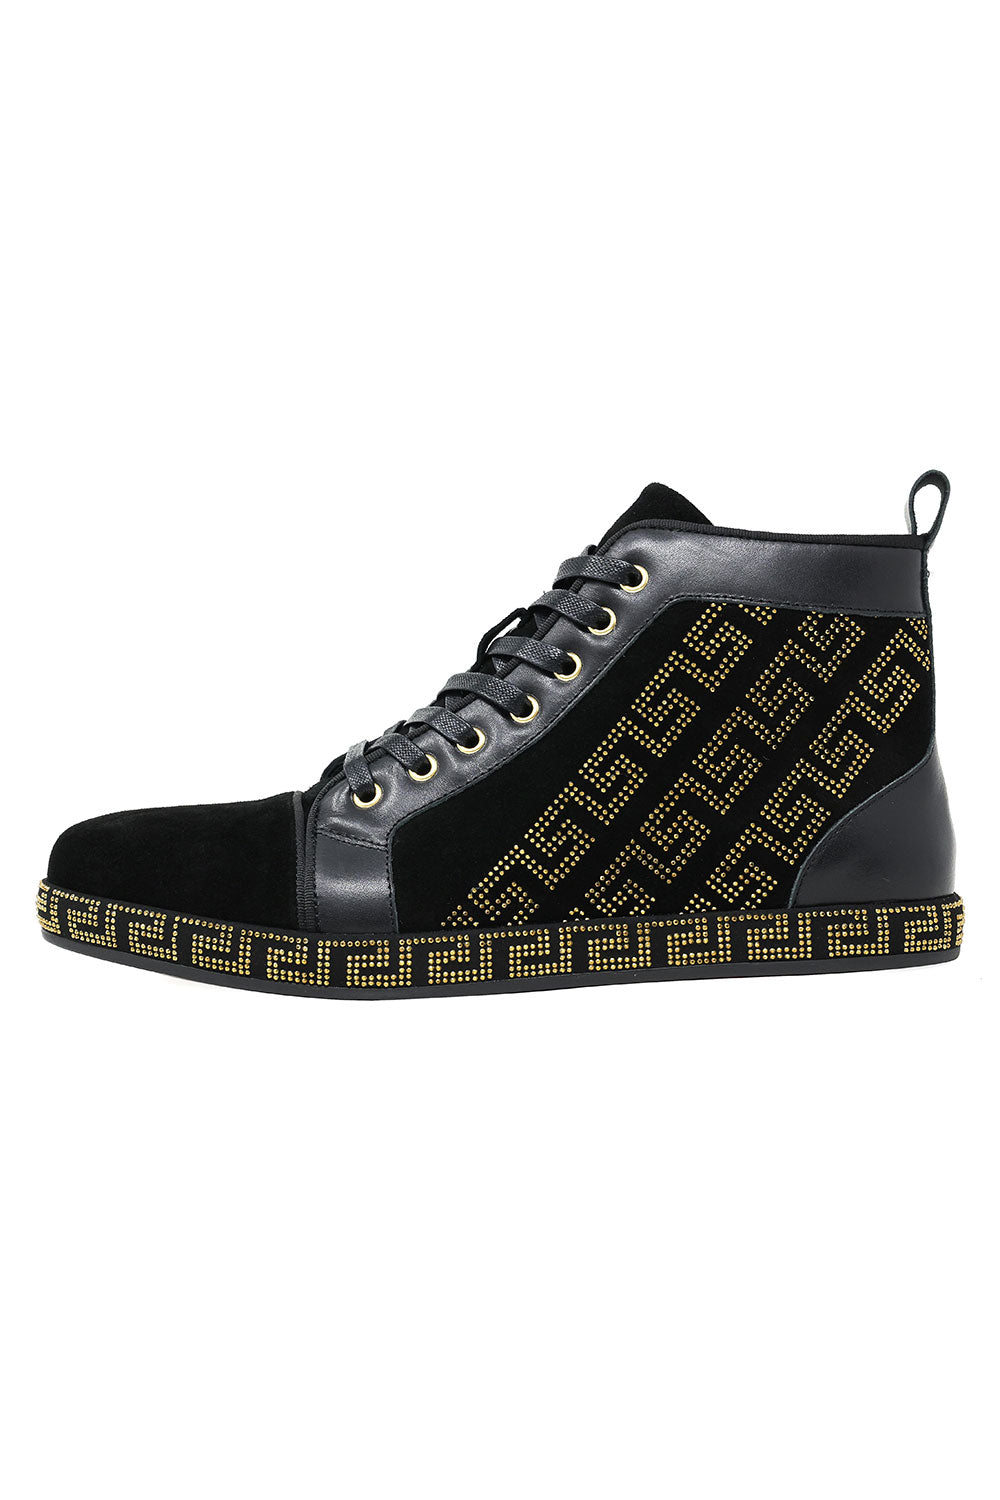 Barabas Men's Rhinestone Greek Pattern Design High Top Sneakers SH729